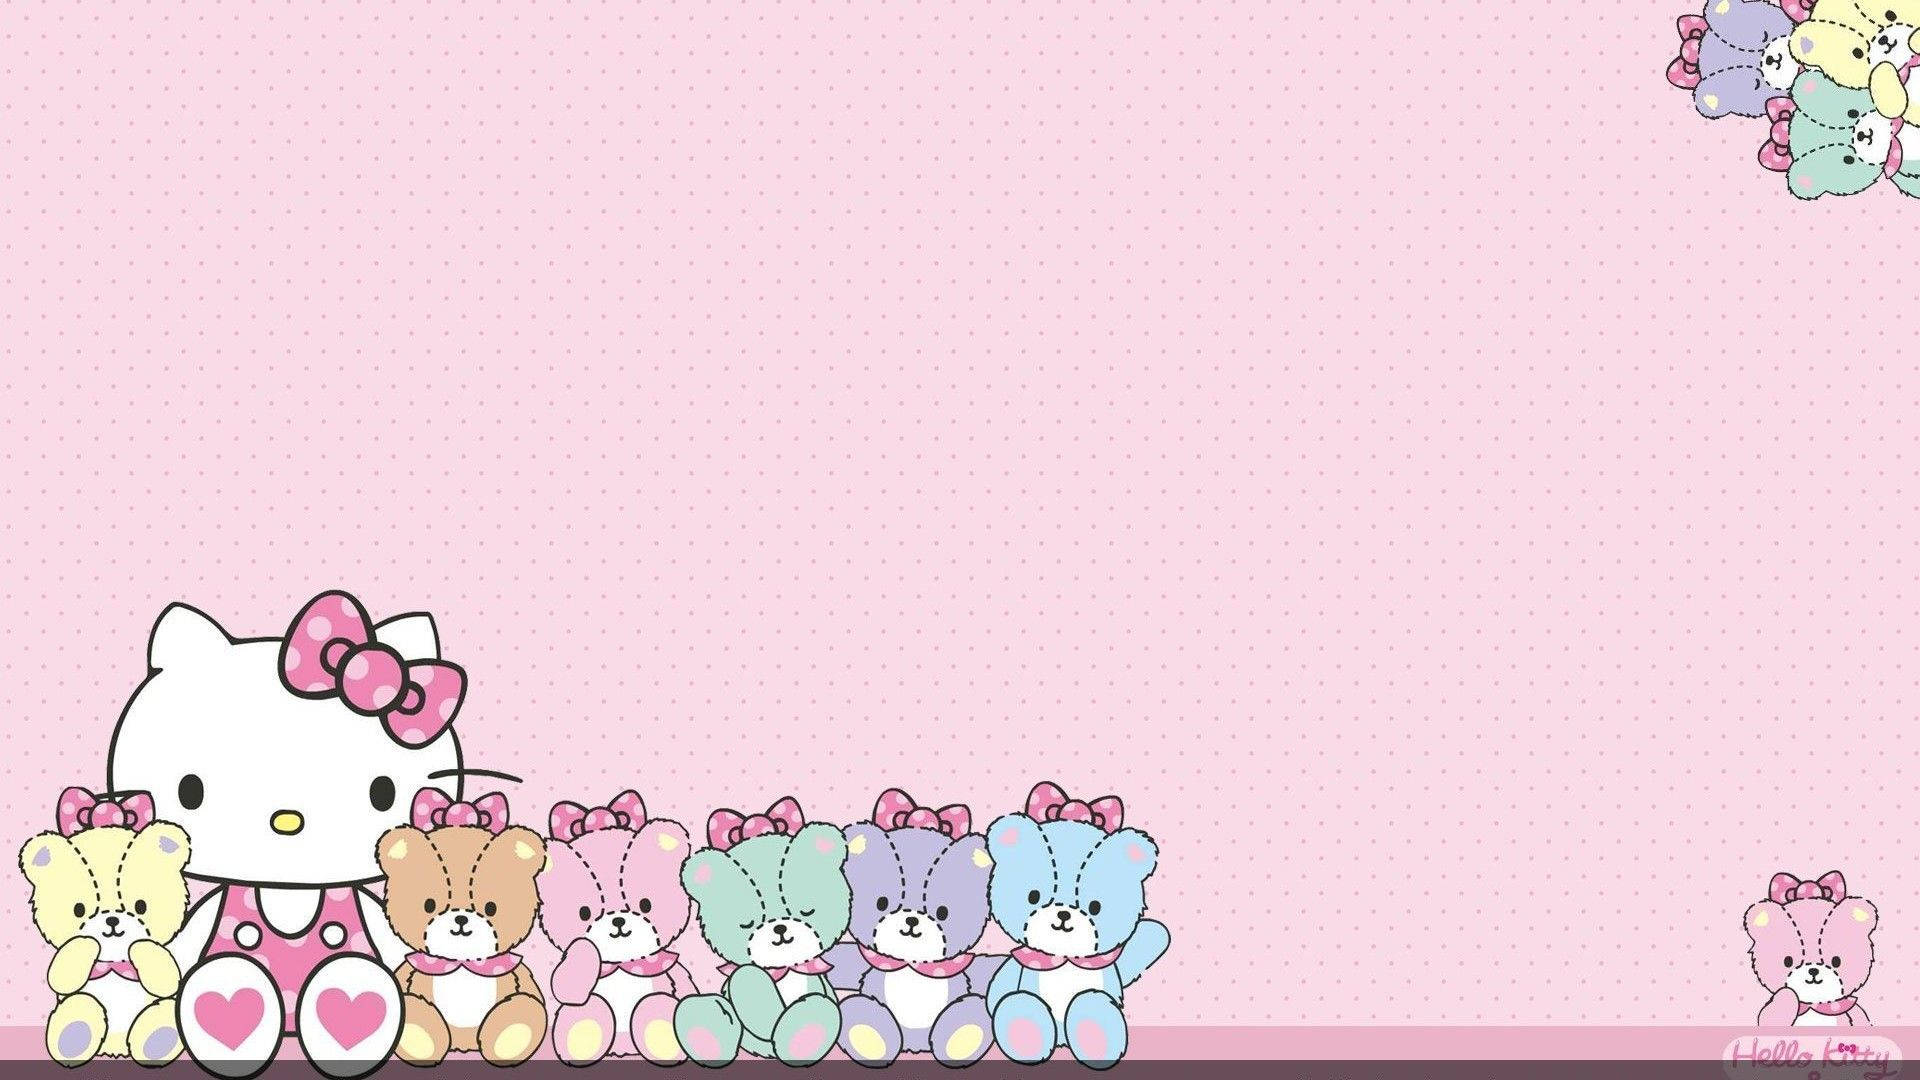 Download Hello Kitty Desktop With Teddy Bears Wallpaper